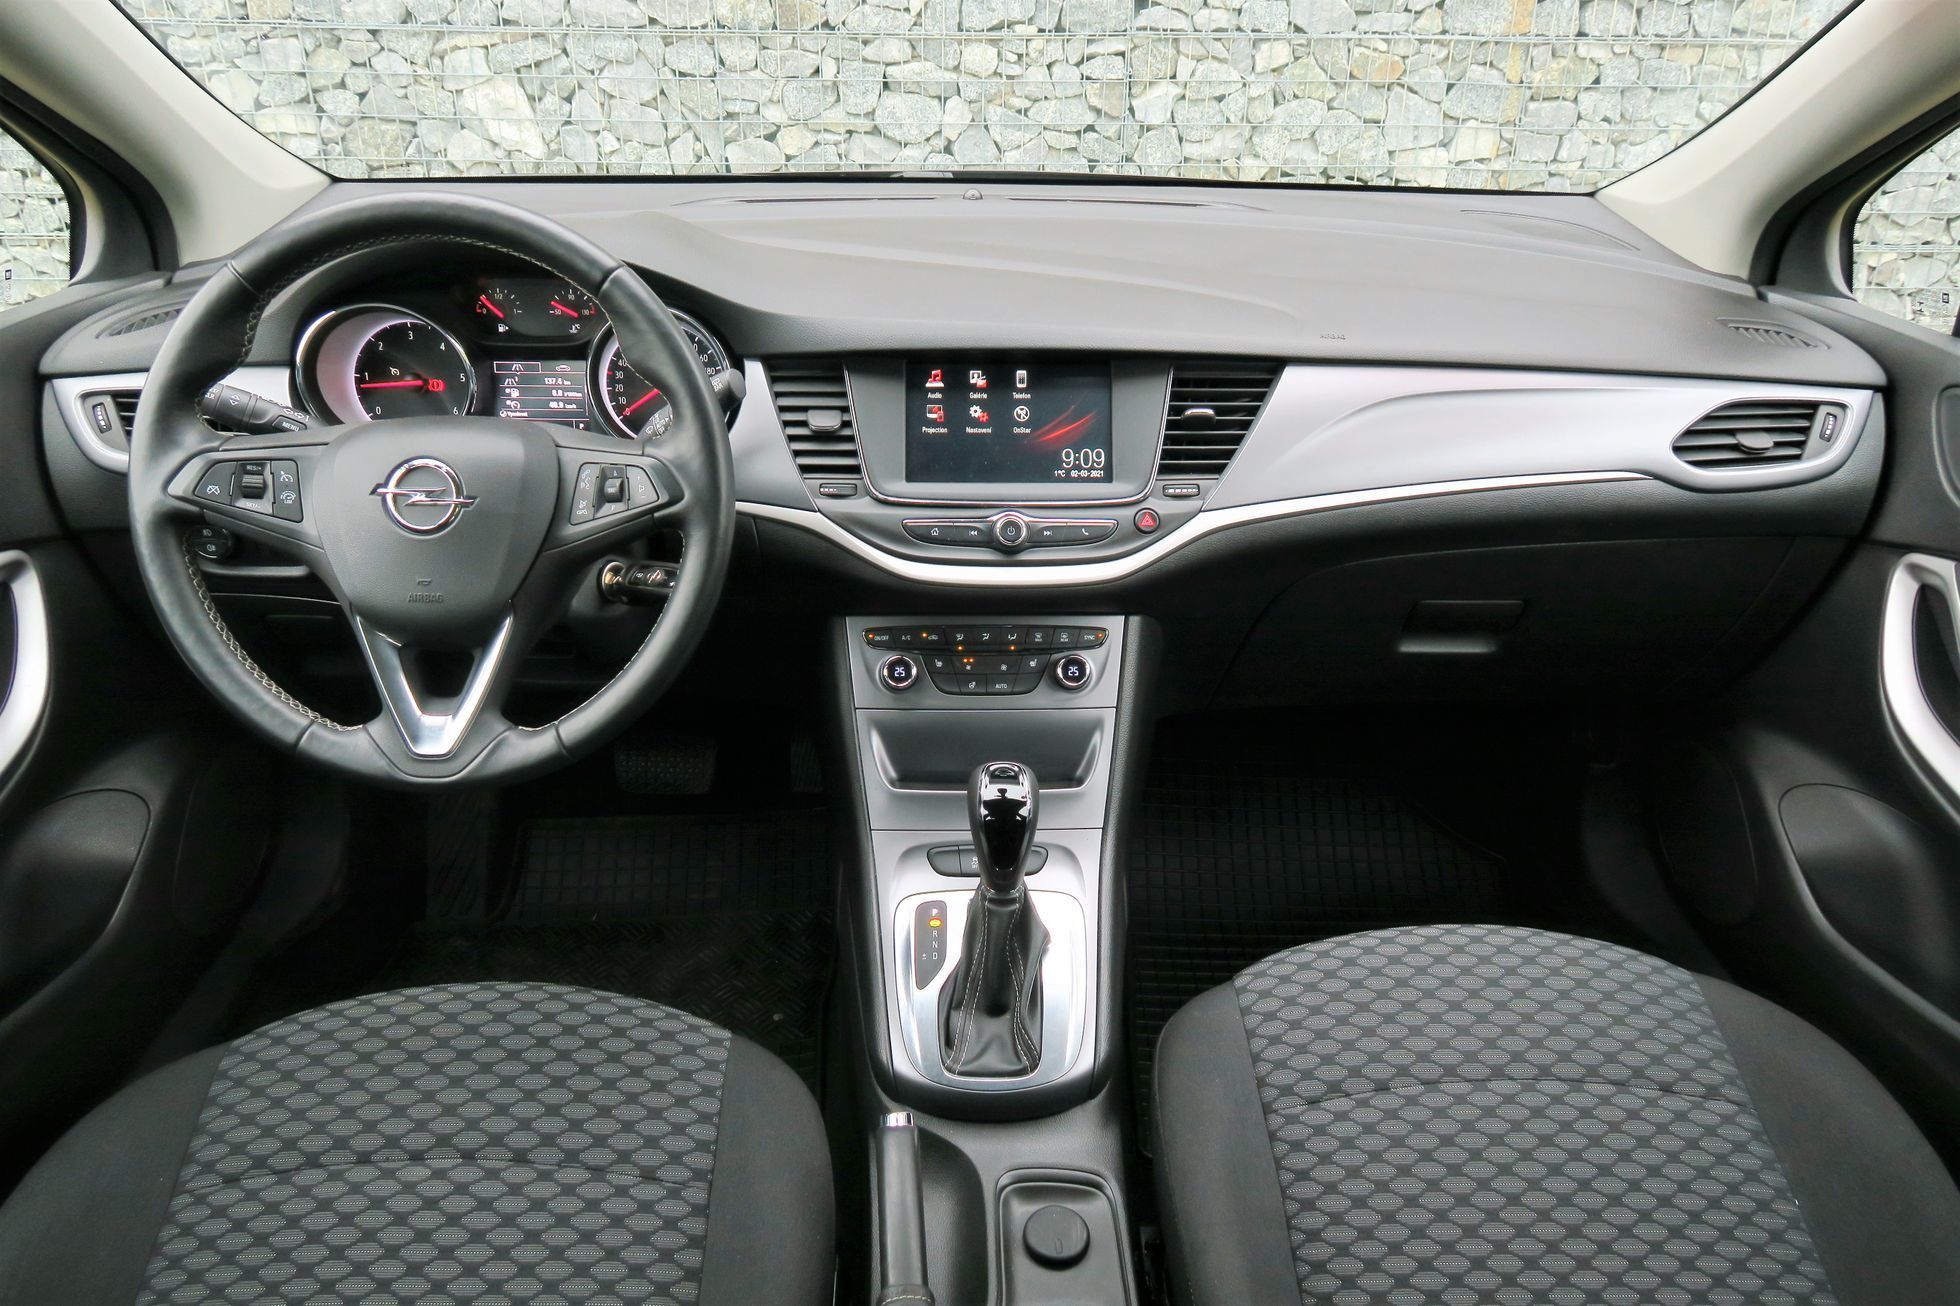 Opel Astra ojetý